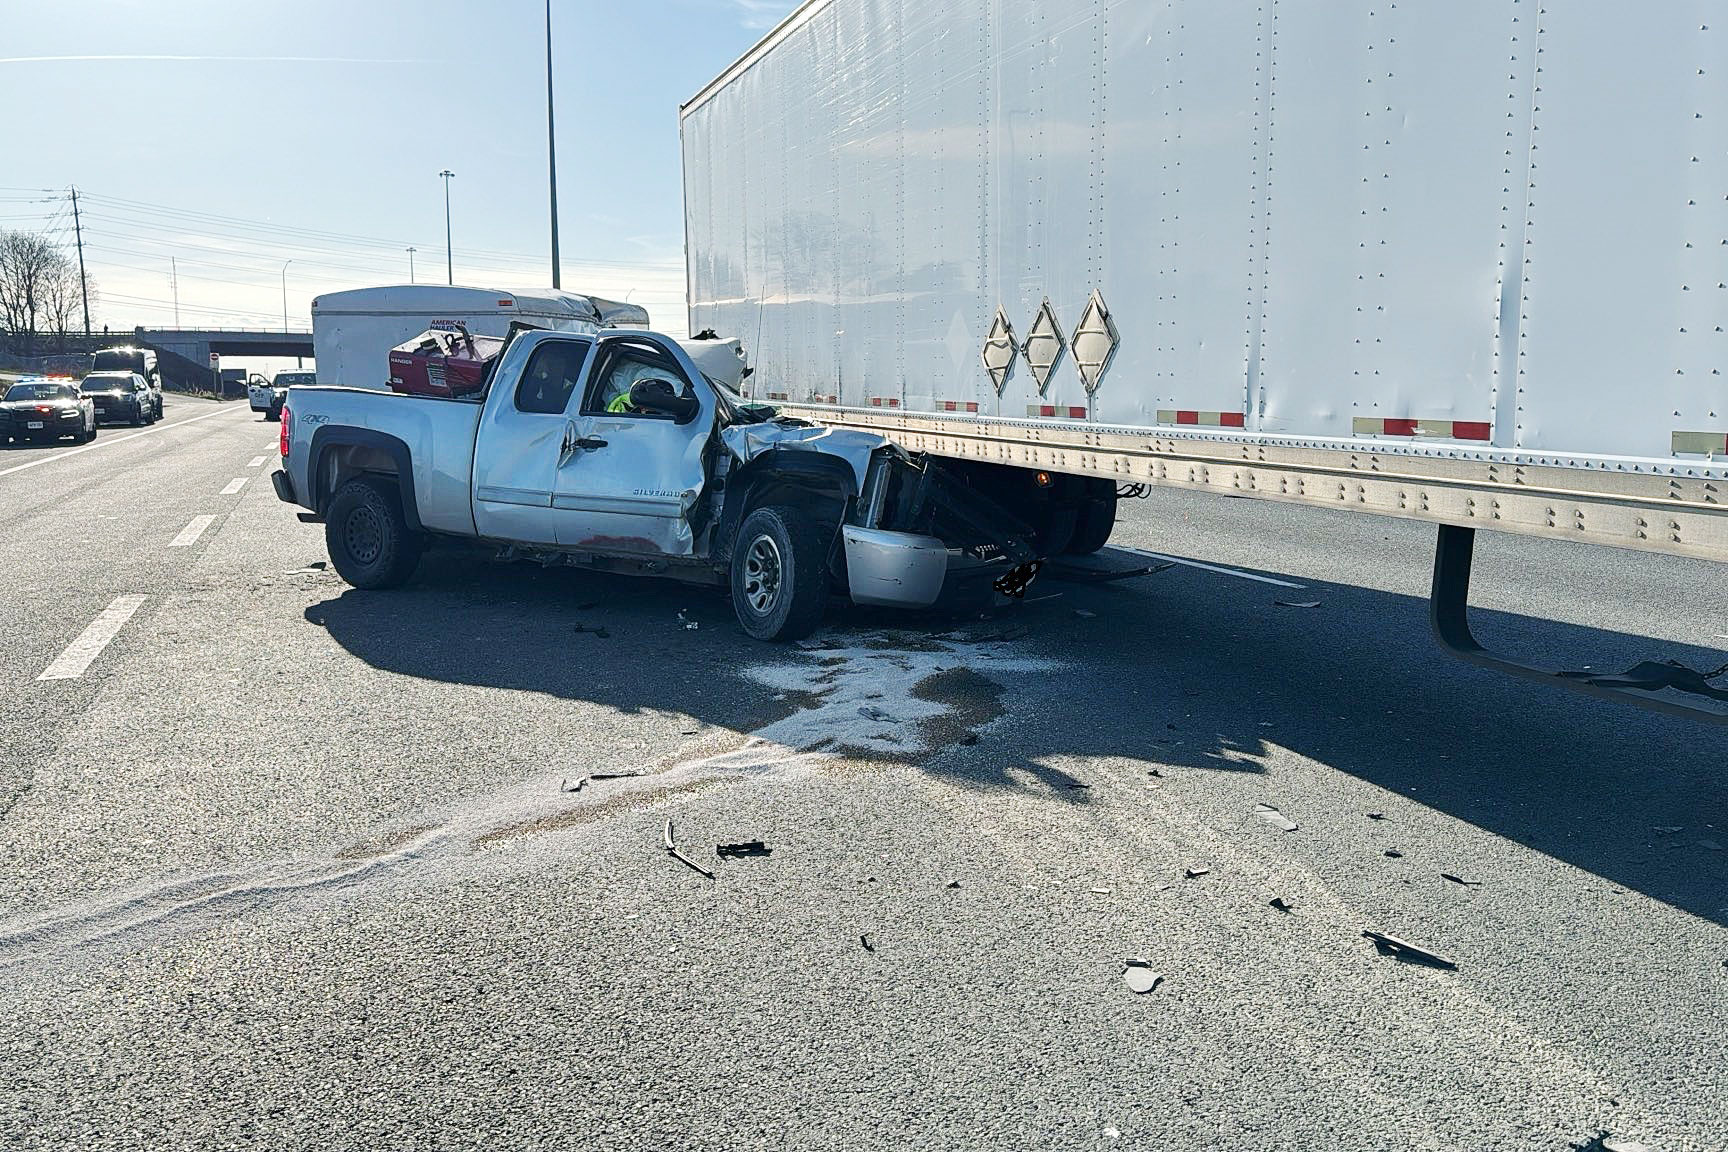 highway 401 crash whitby